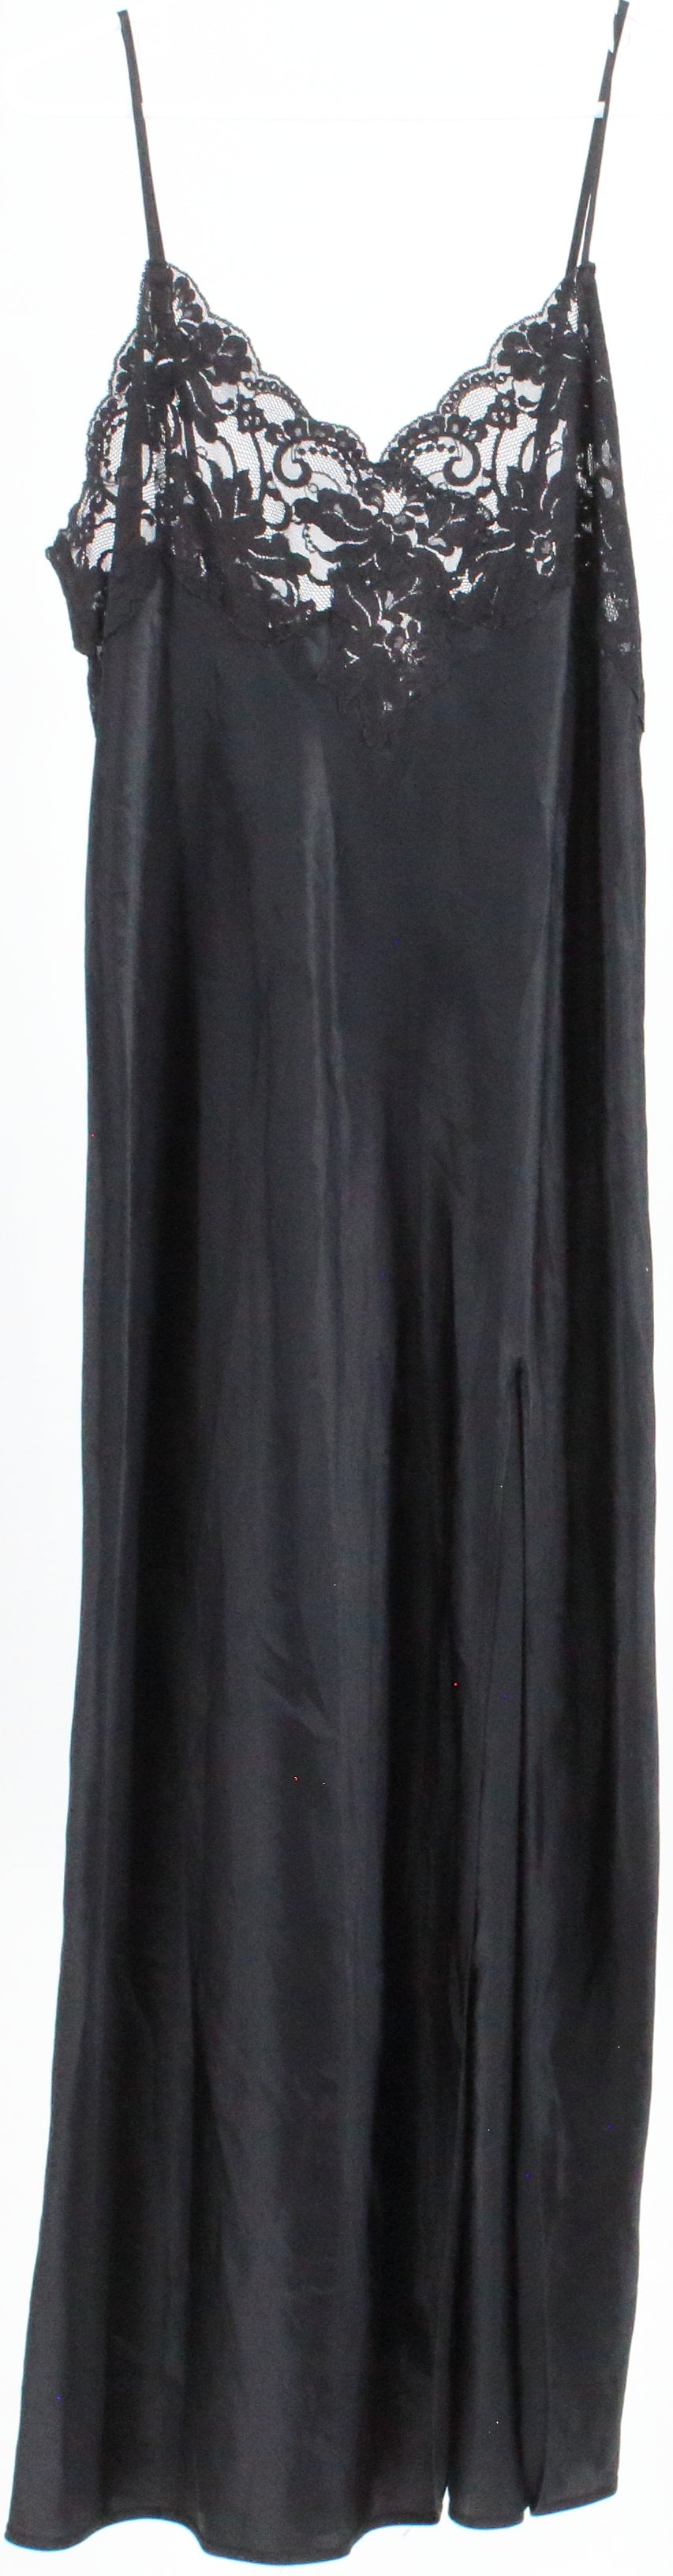 Victoria's Secret Black Satin Long Slip Dress